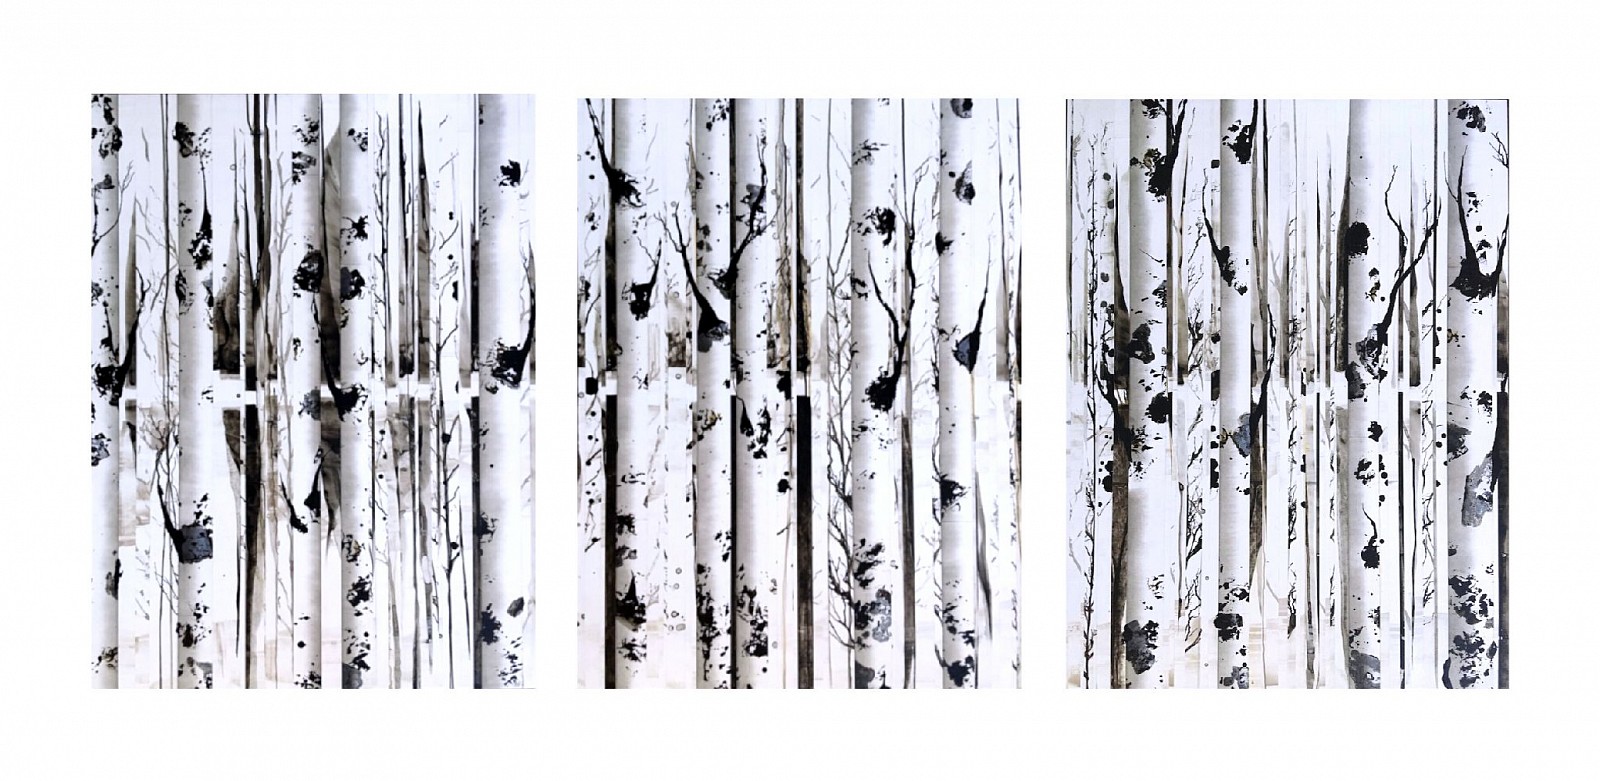 Anastasia Kimmett, Still Life
Mixed Media, 48 x 108 in. (121.9 x 274.3 cm)
Triptych, each panel is 48" x 36"
SOLD
7251
&bull;